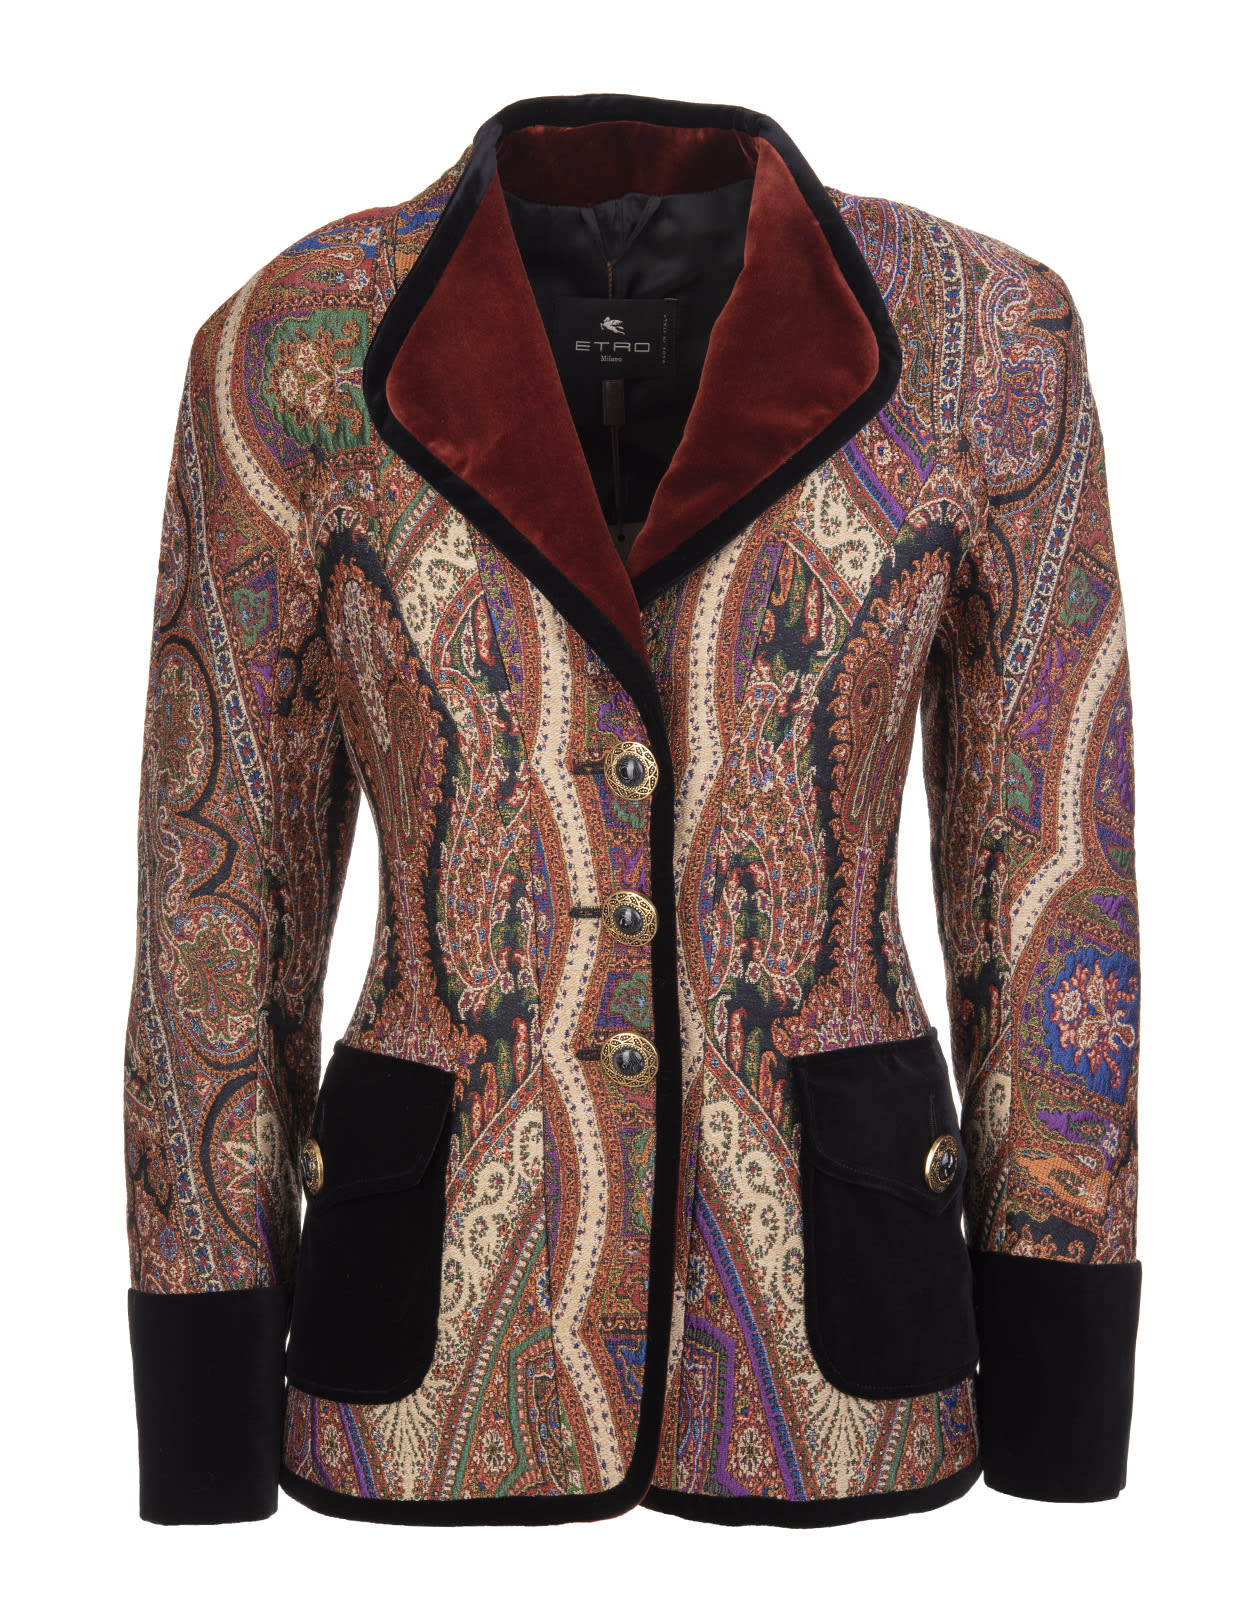 Etro Woman Jacquard Jacket With Paisley Pattern